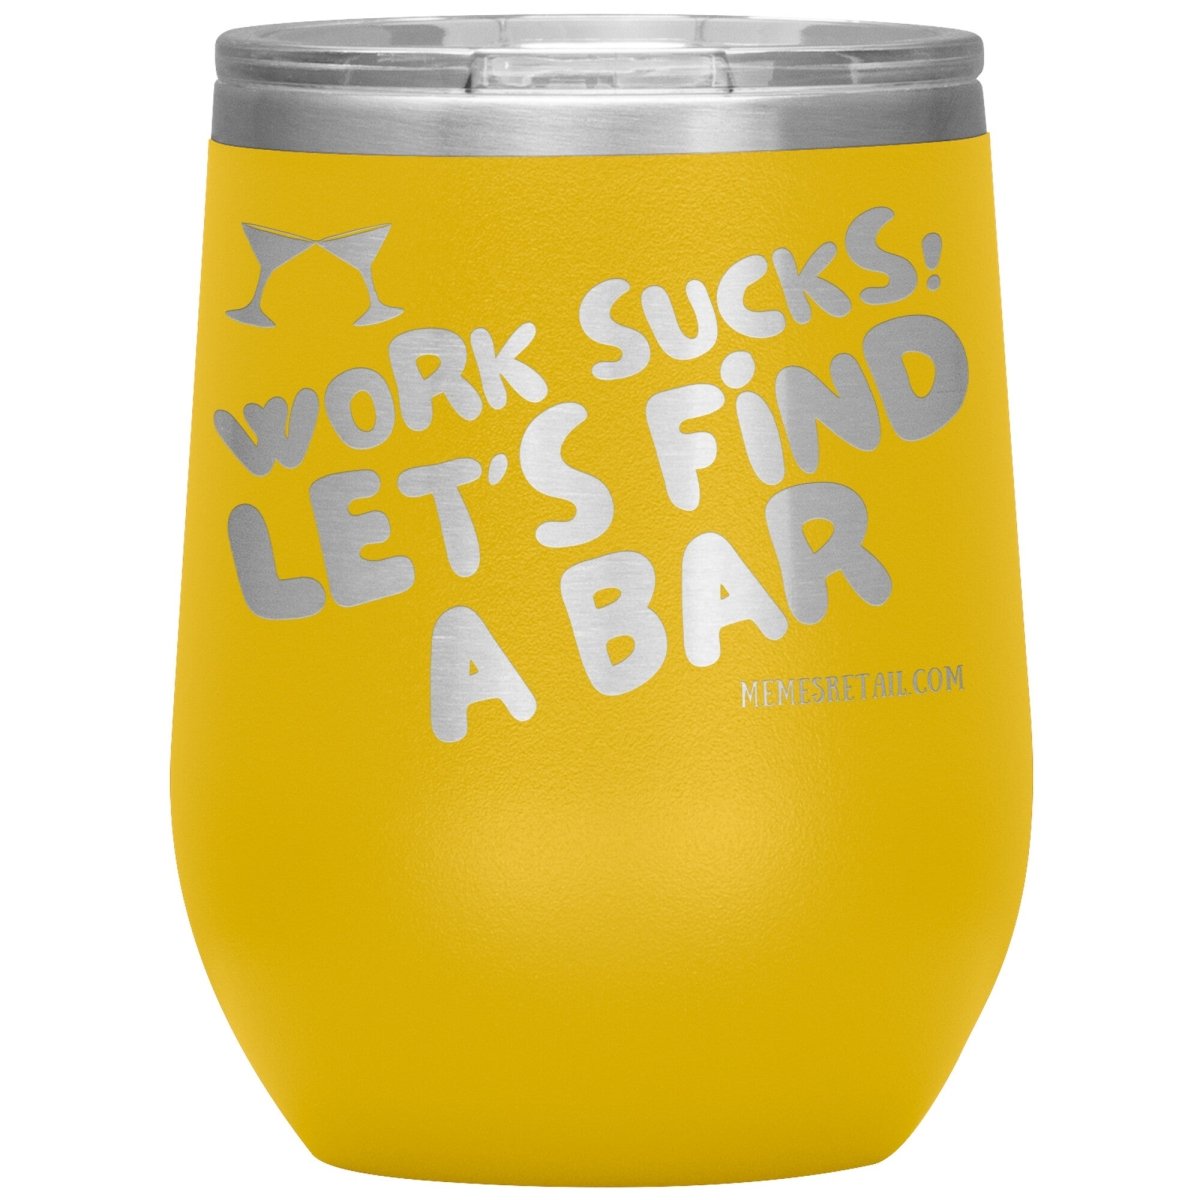 Work Sucks! Let's Find A Bar Tumblers, 12oz Wine Insulated Tumbler / Yellow - MemesRetail.com